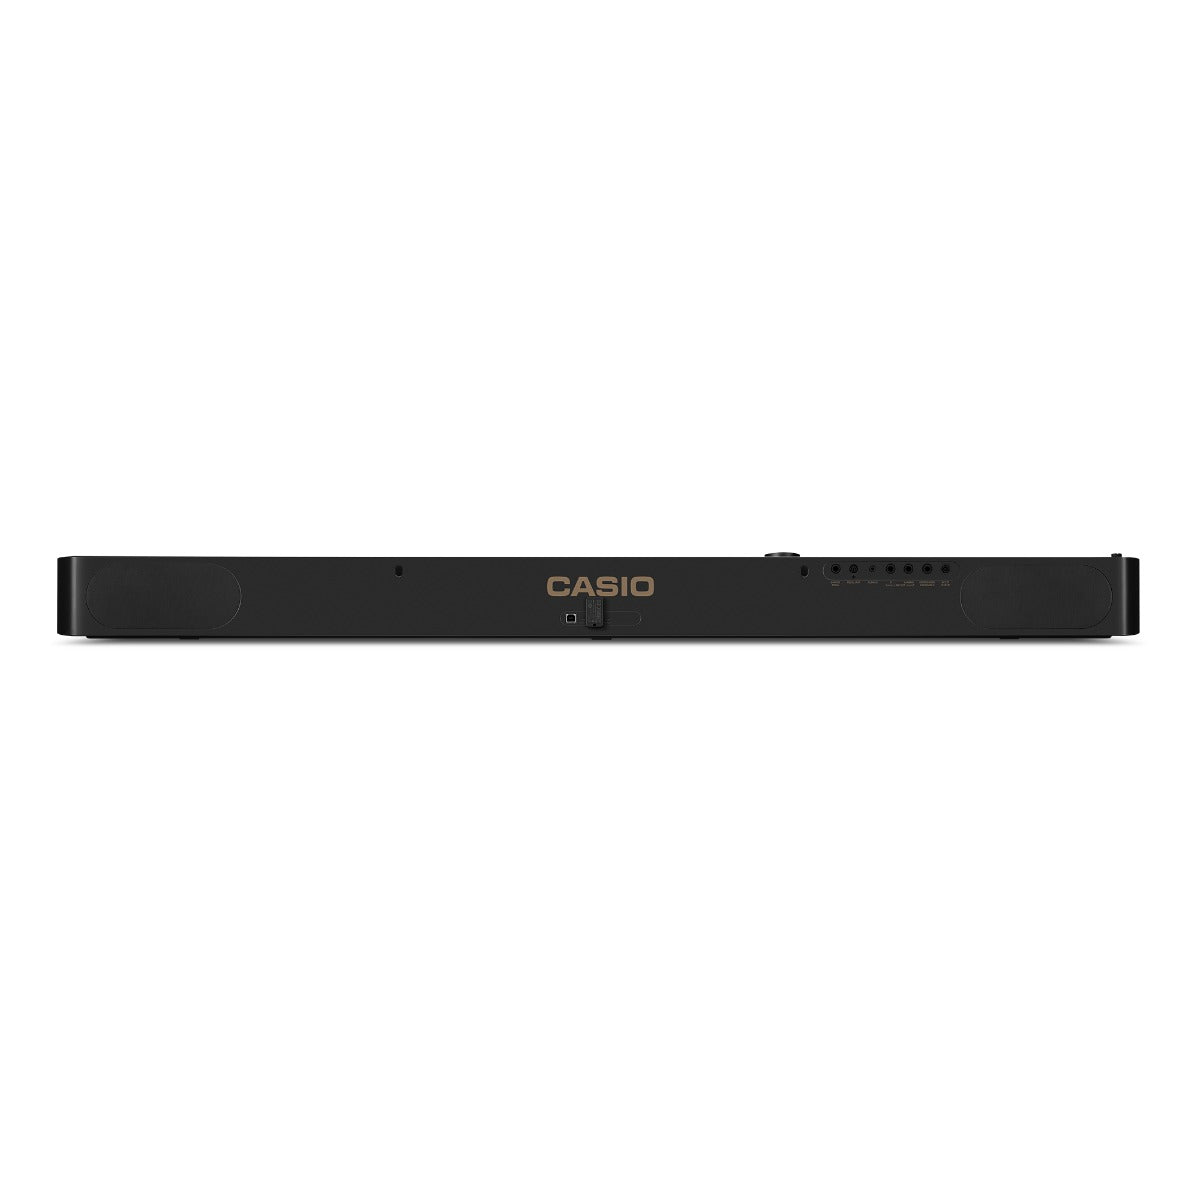 Casio PX-S3100 Digital Piano - Black, View 5